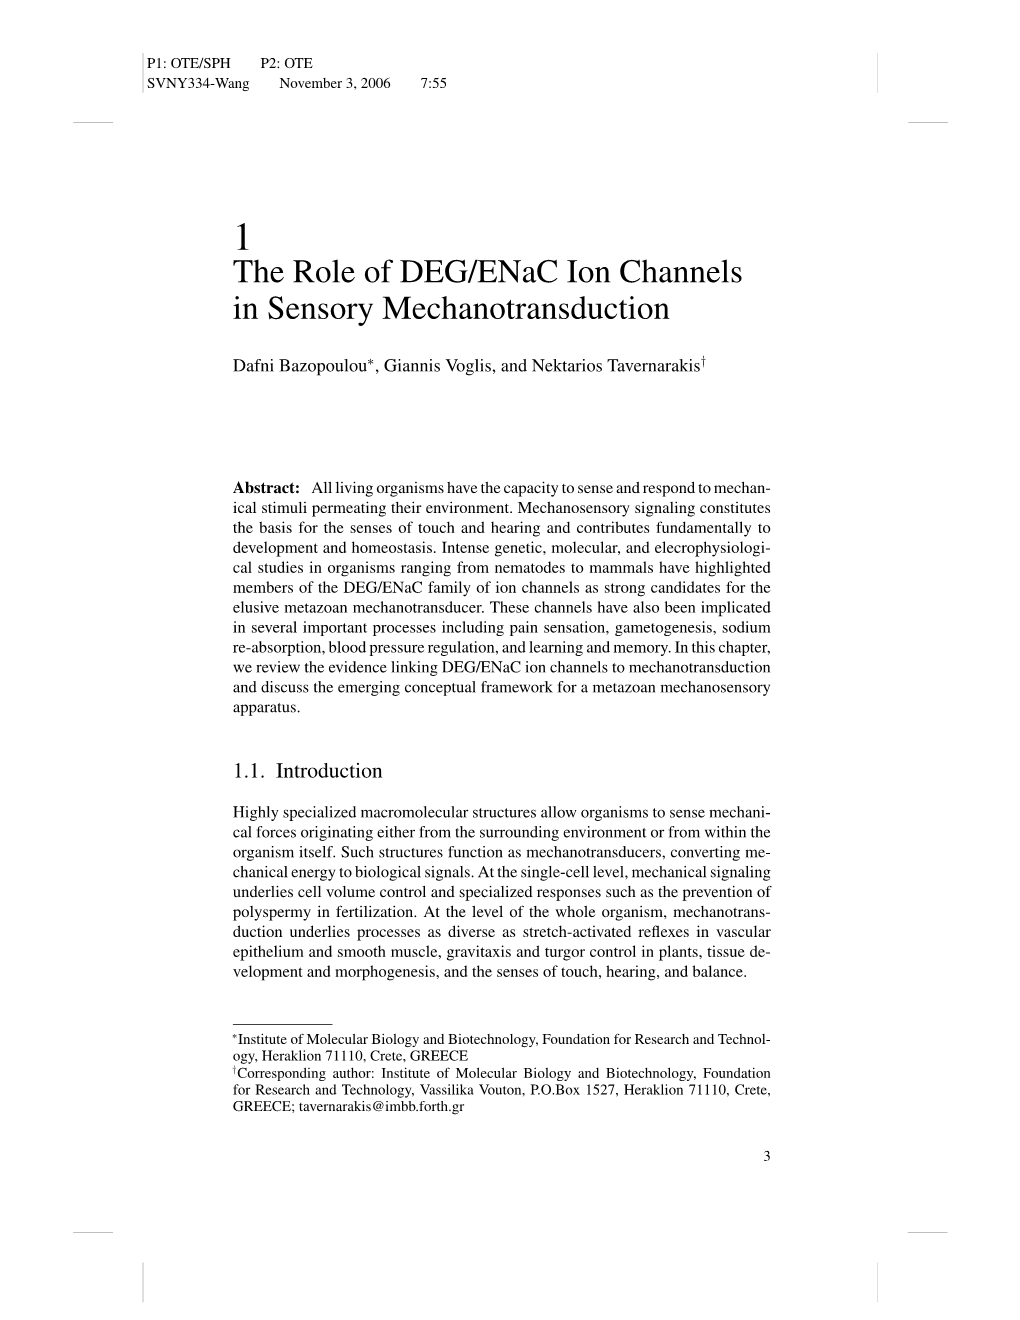 The Role of DEG/Enac Ion Channels in Sensory Mechanotransduction